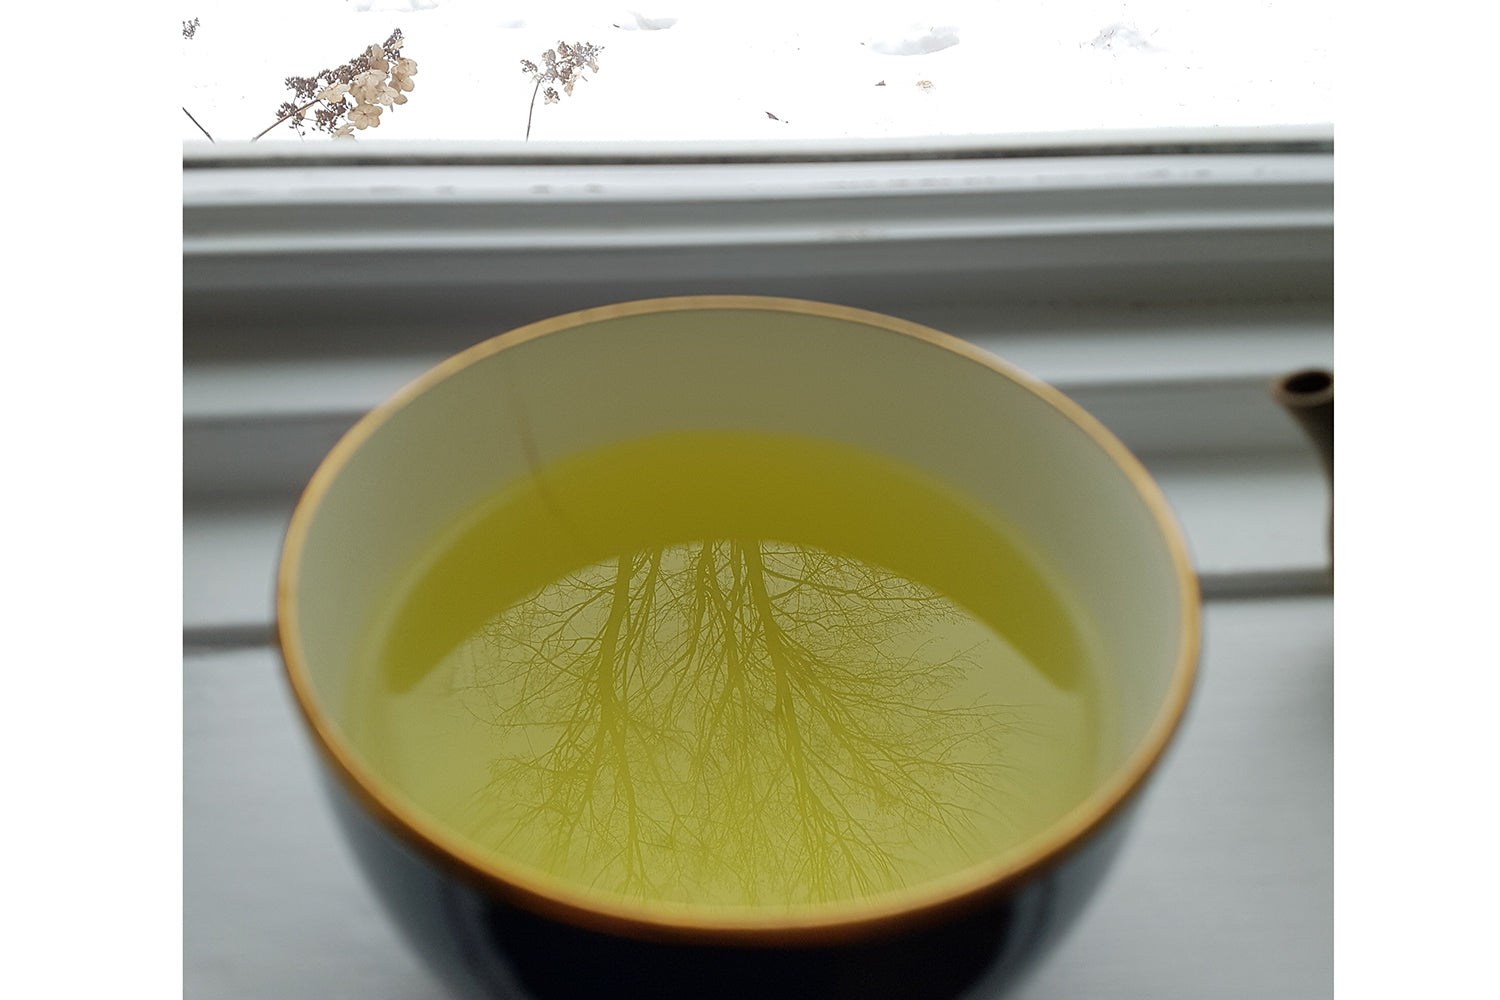 Le thé vert bancha, reflet du principe wabi sabi